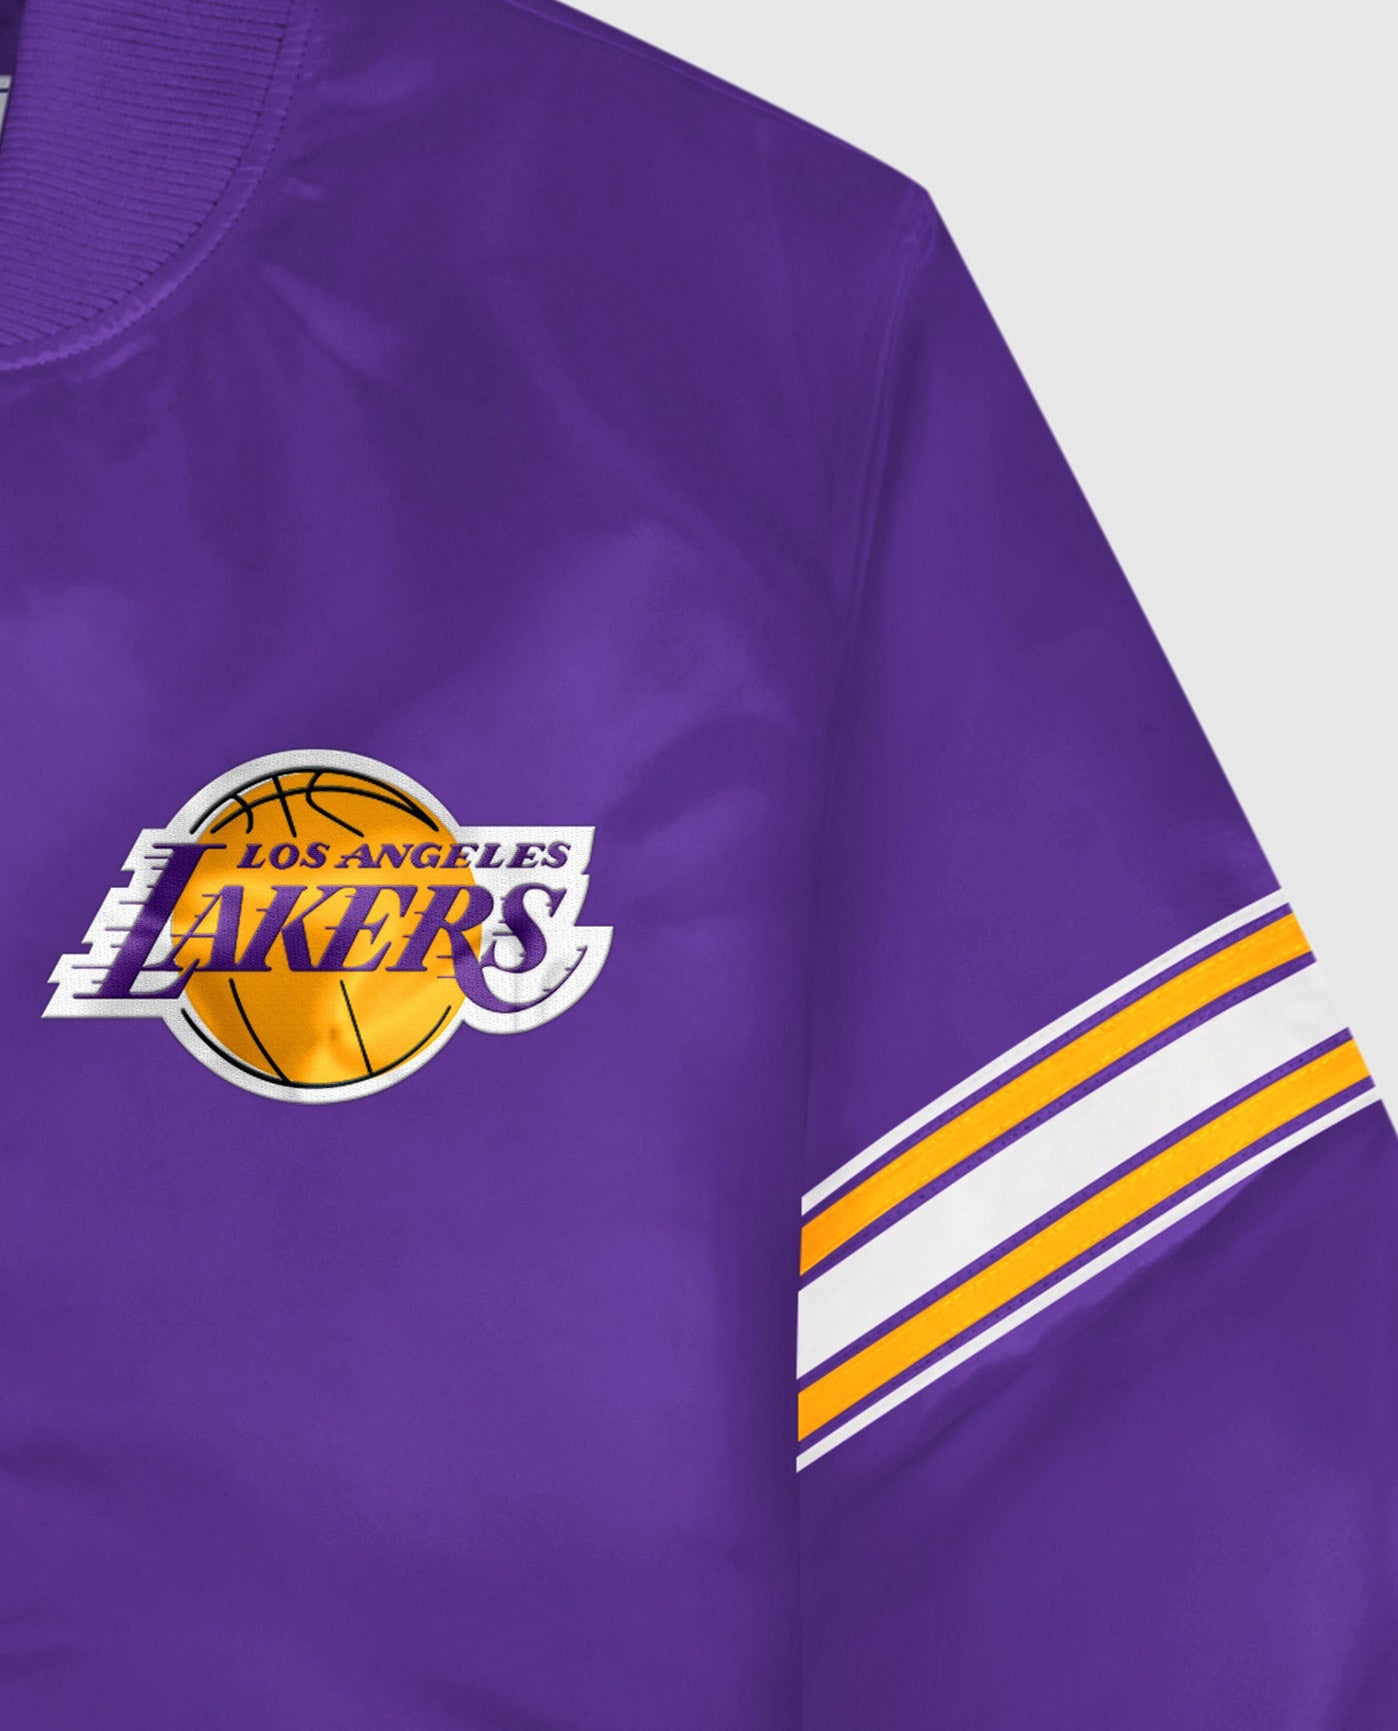 Men's Starter Purple/Gold Los Angeles Lakers Fast Break Satin Full-Snap Jacket